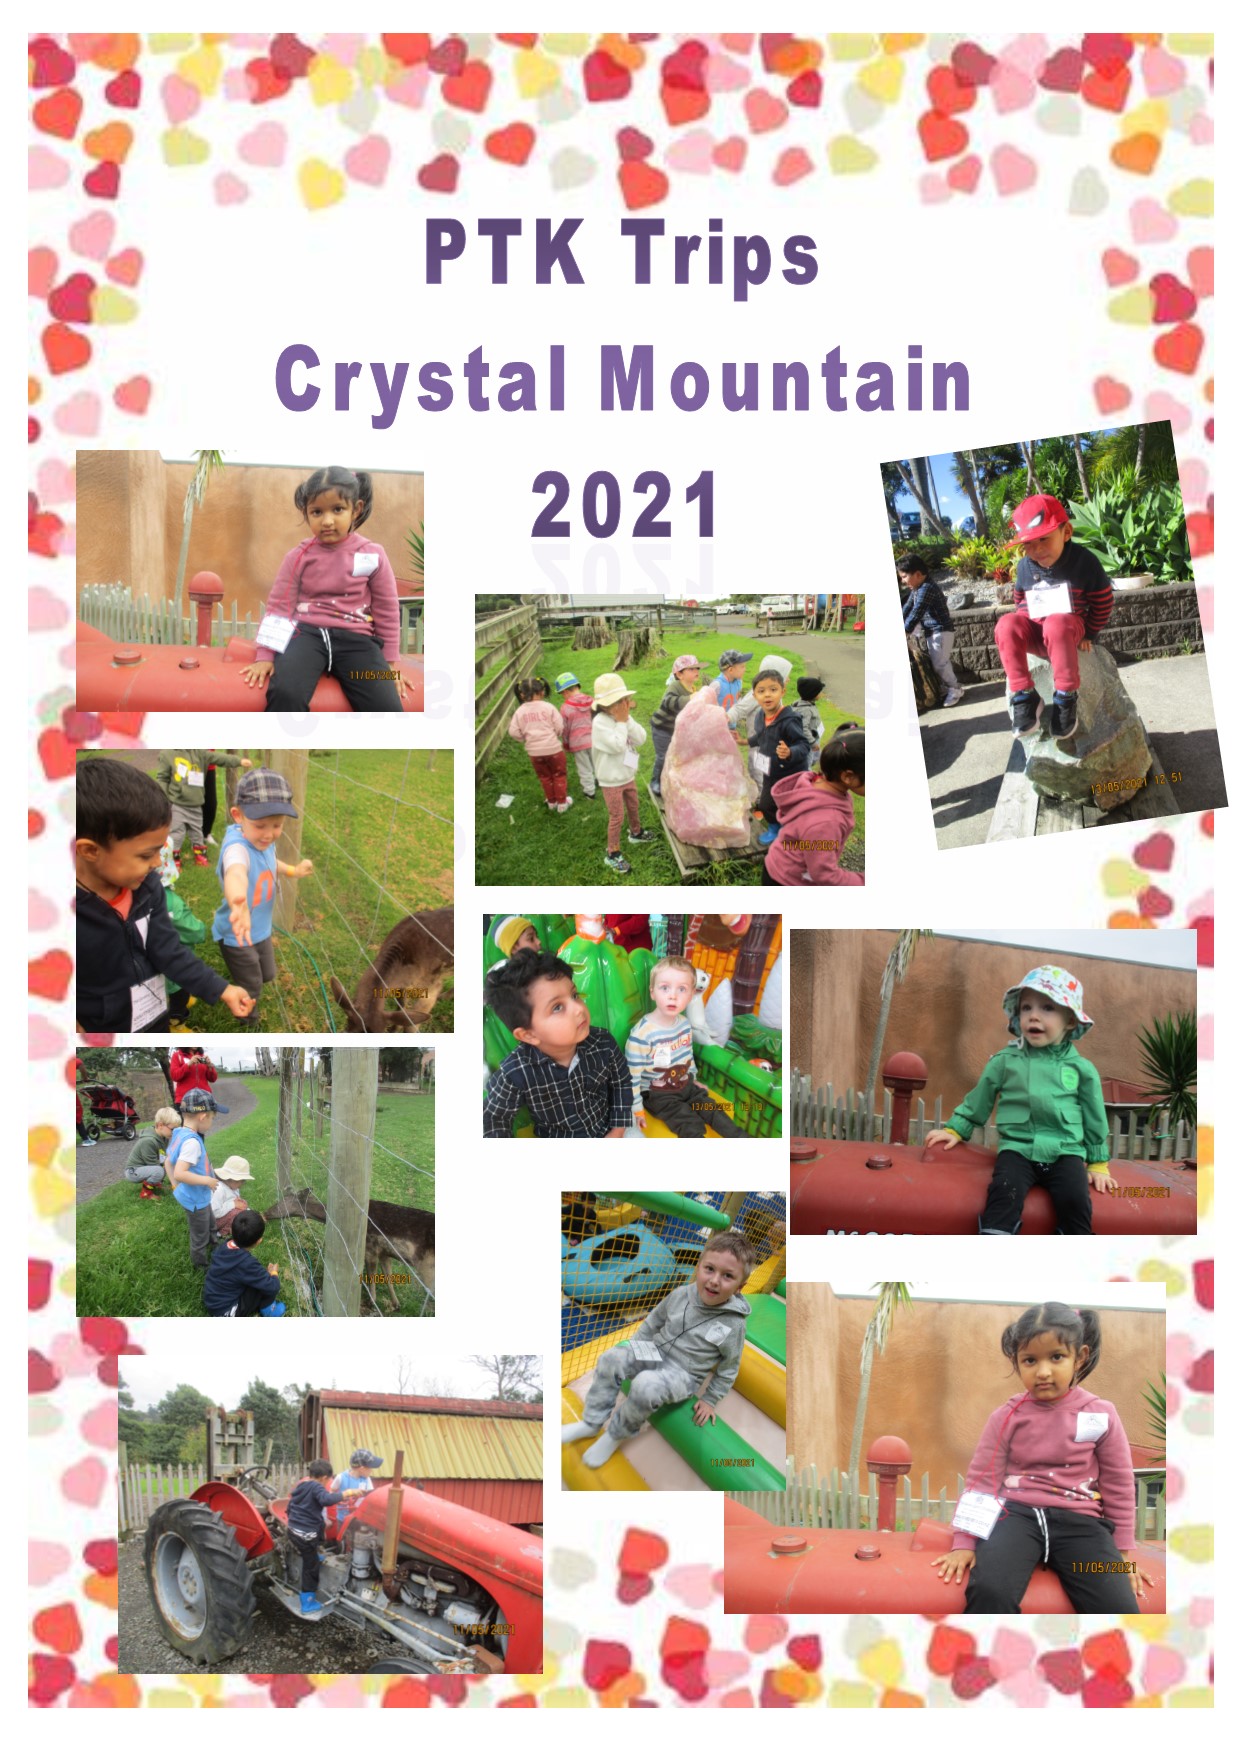 hill_rd_crystal_mountain_ptk_trip_2021.jpg